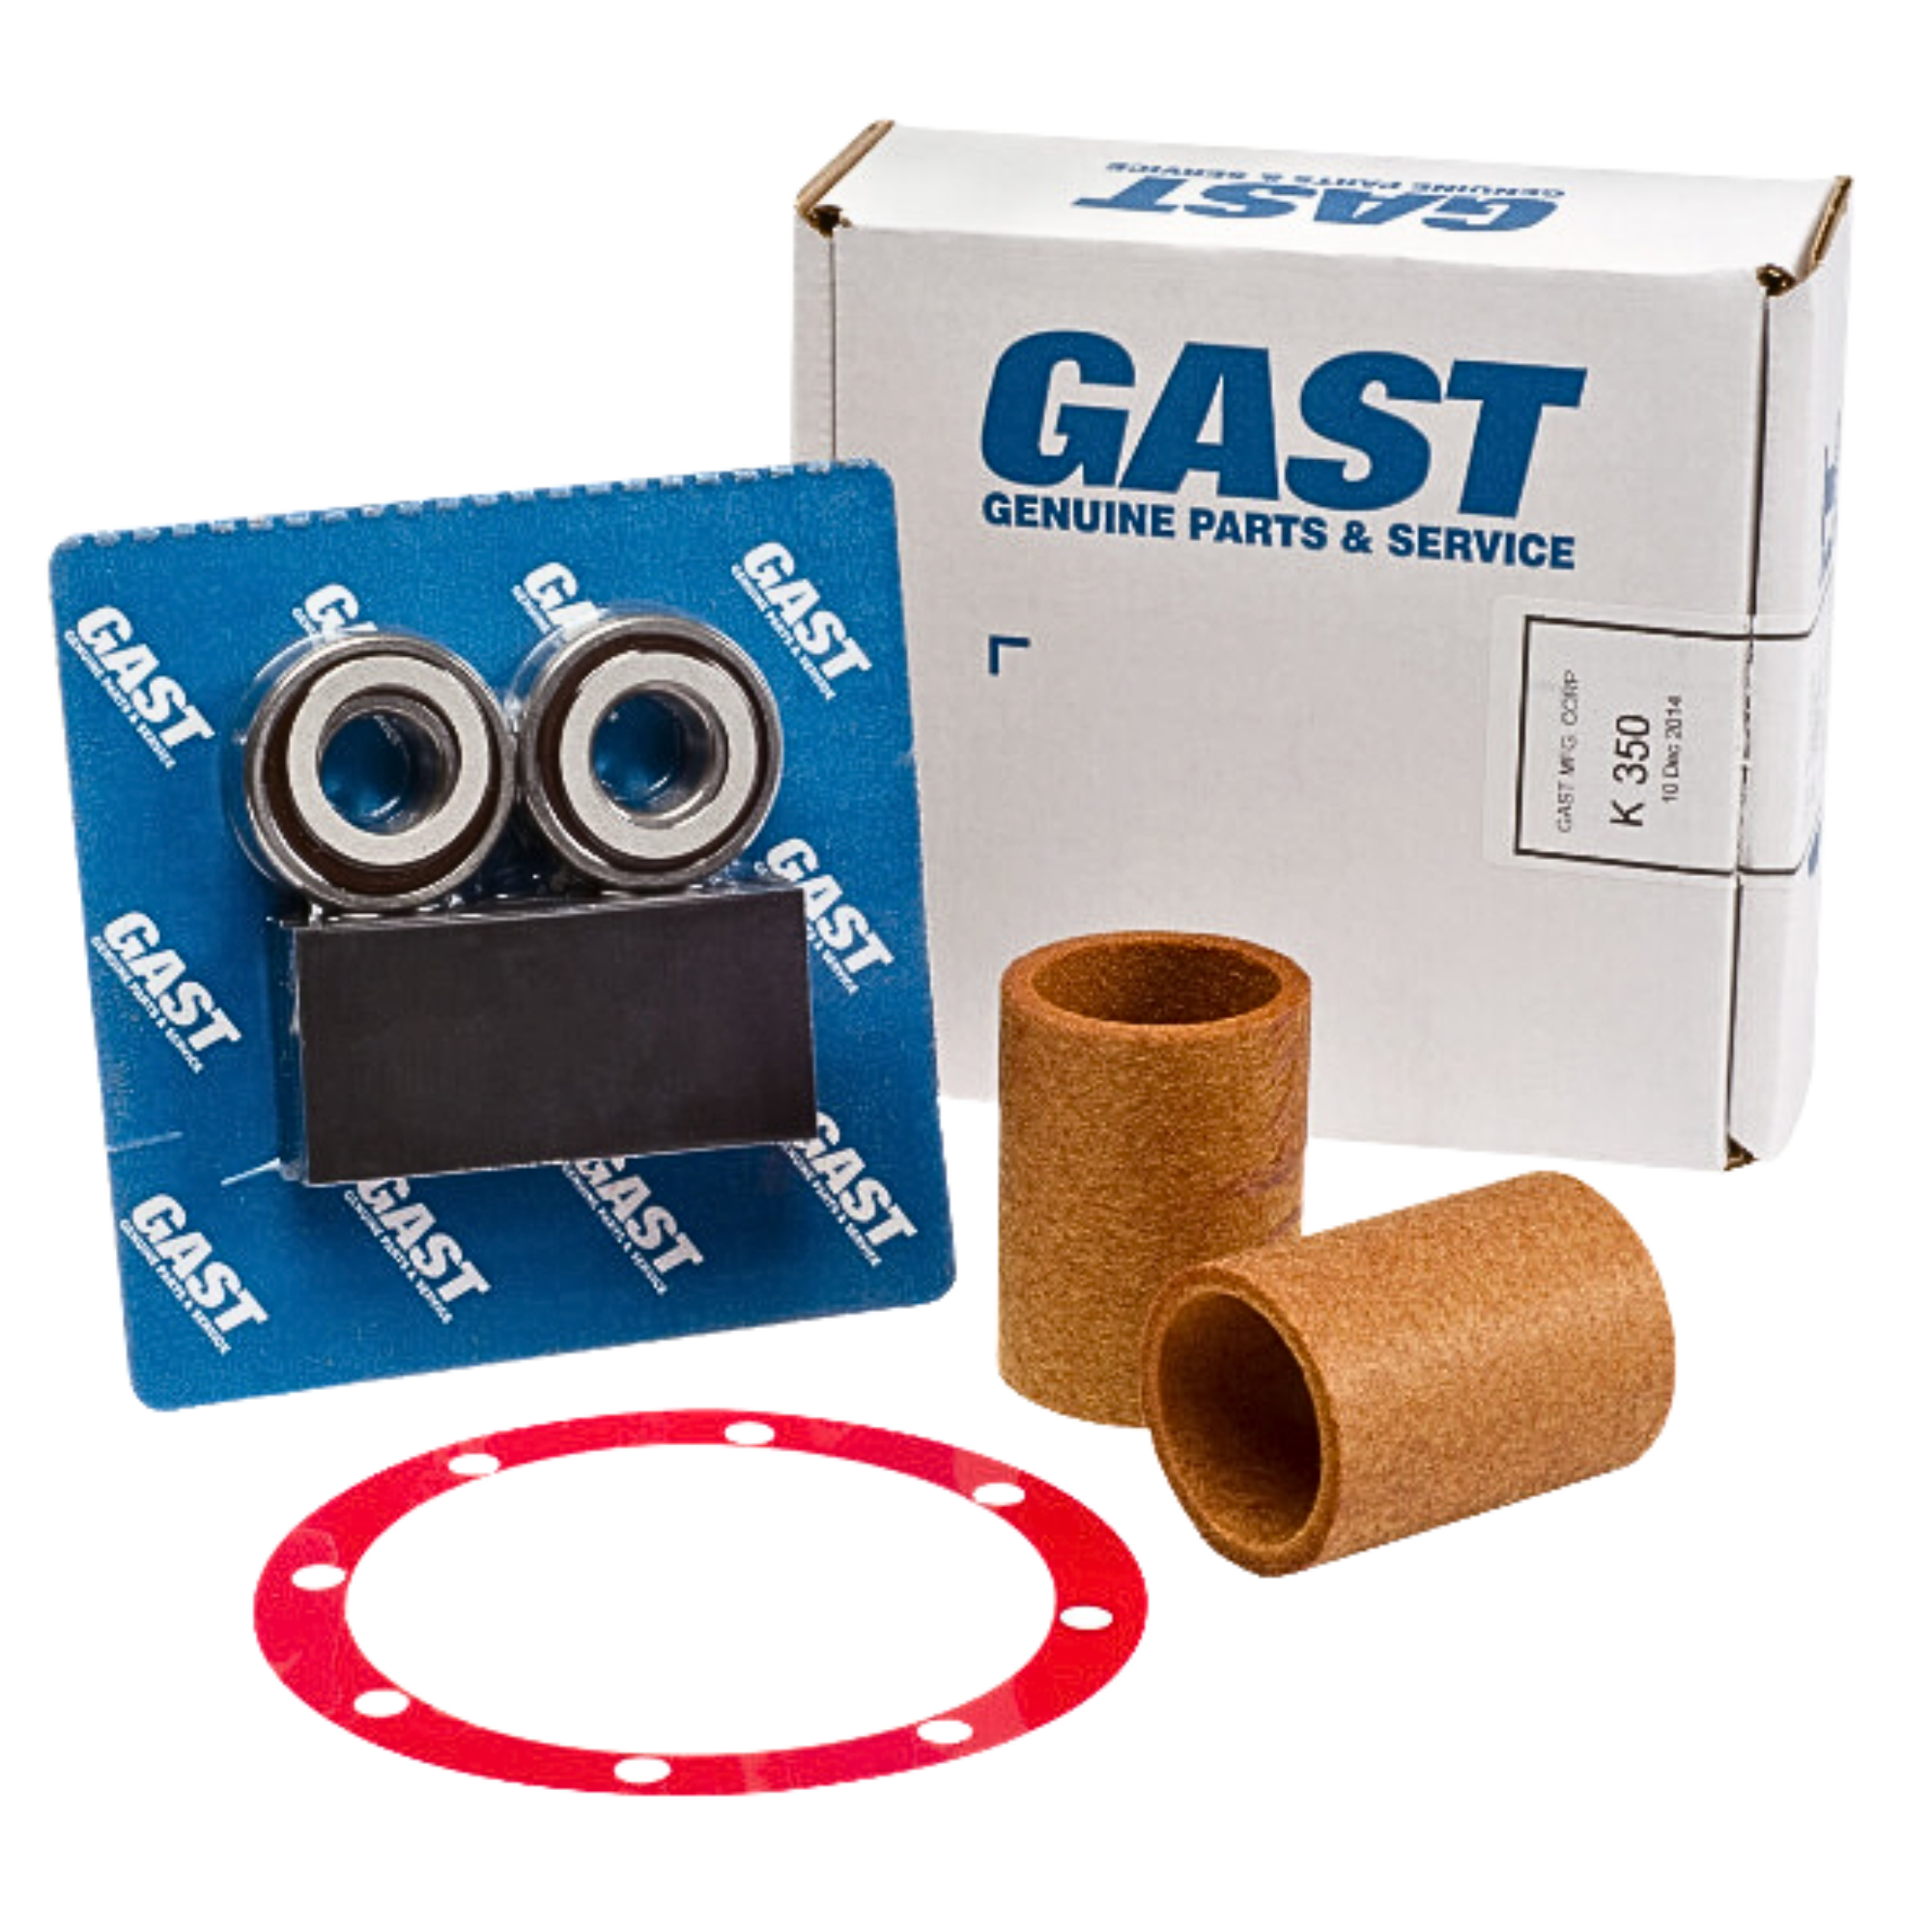 Gast | 2067/2567 Oil-less Service Kit | K350 used on gast product line